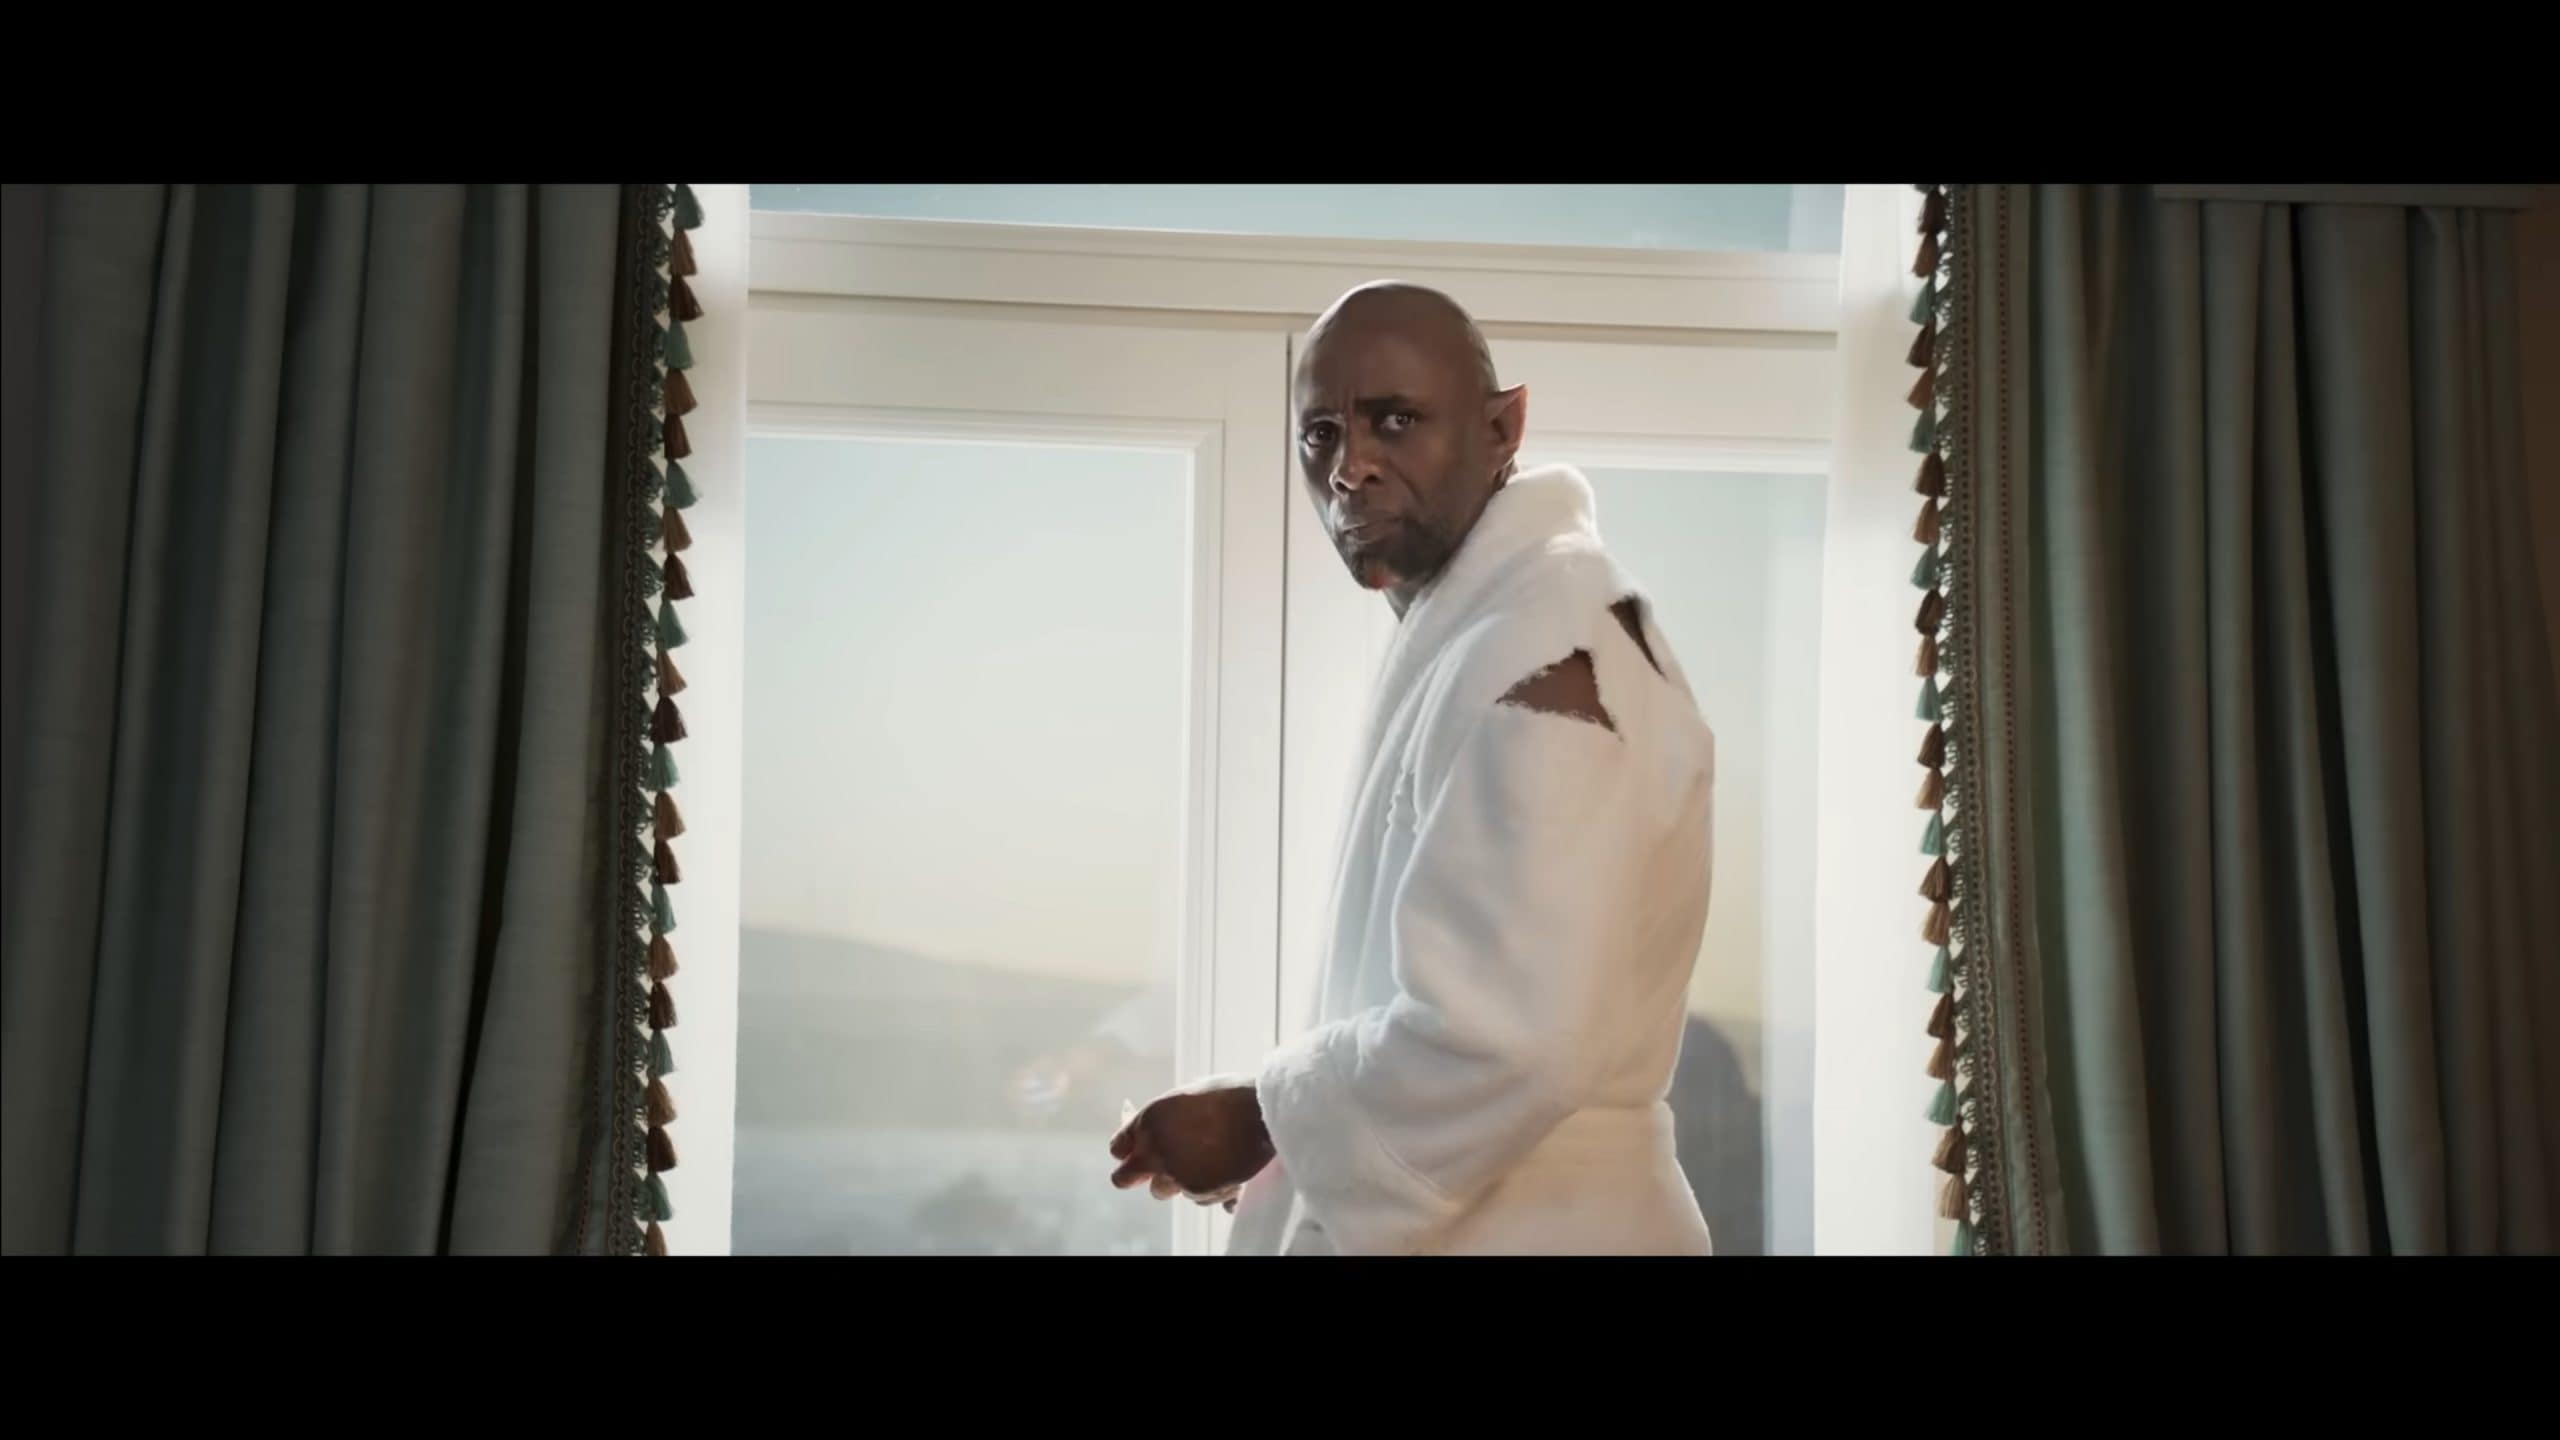 Djinn (Idris Elba) in a robe, telling his story